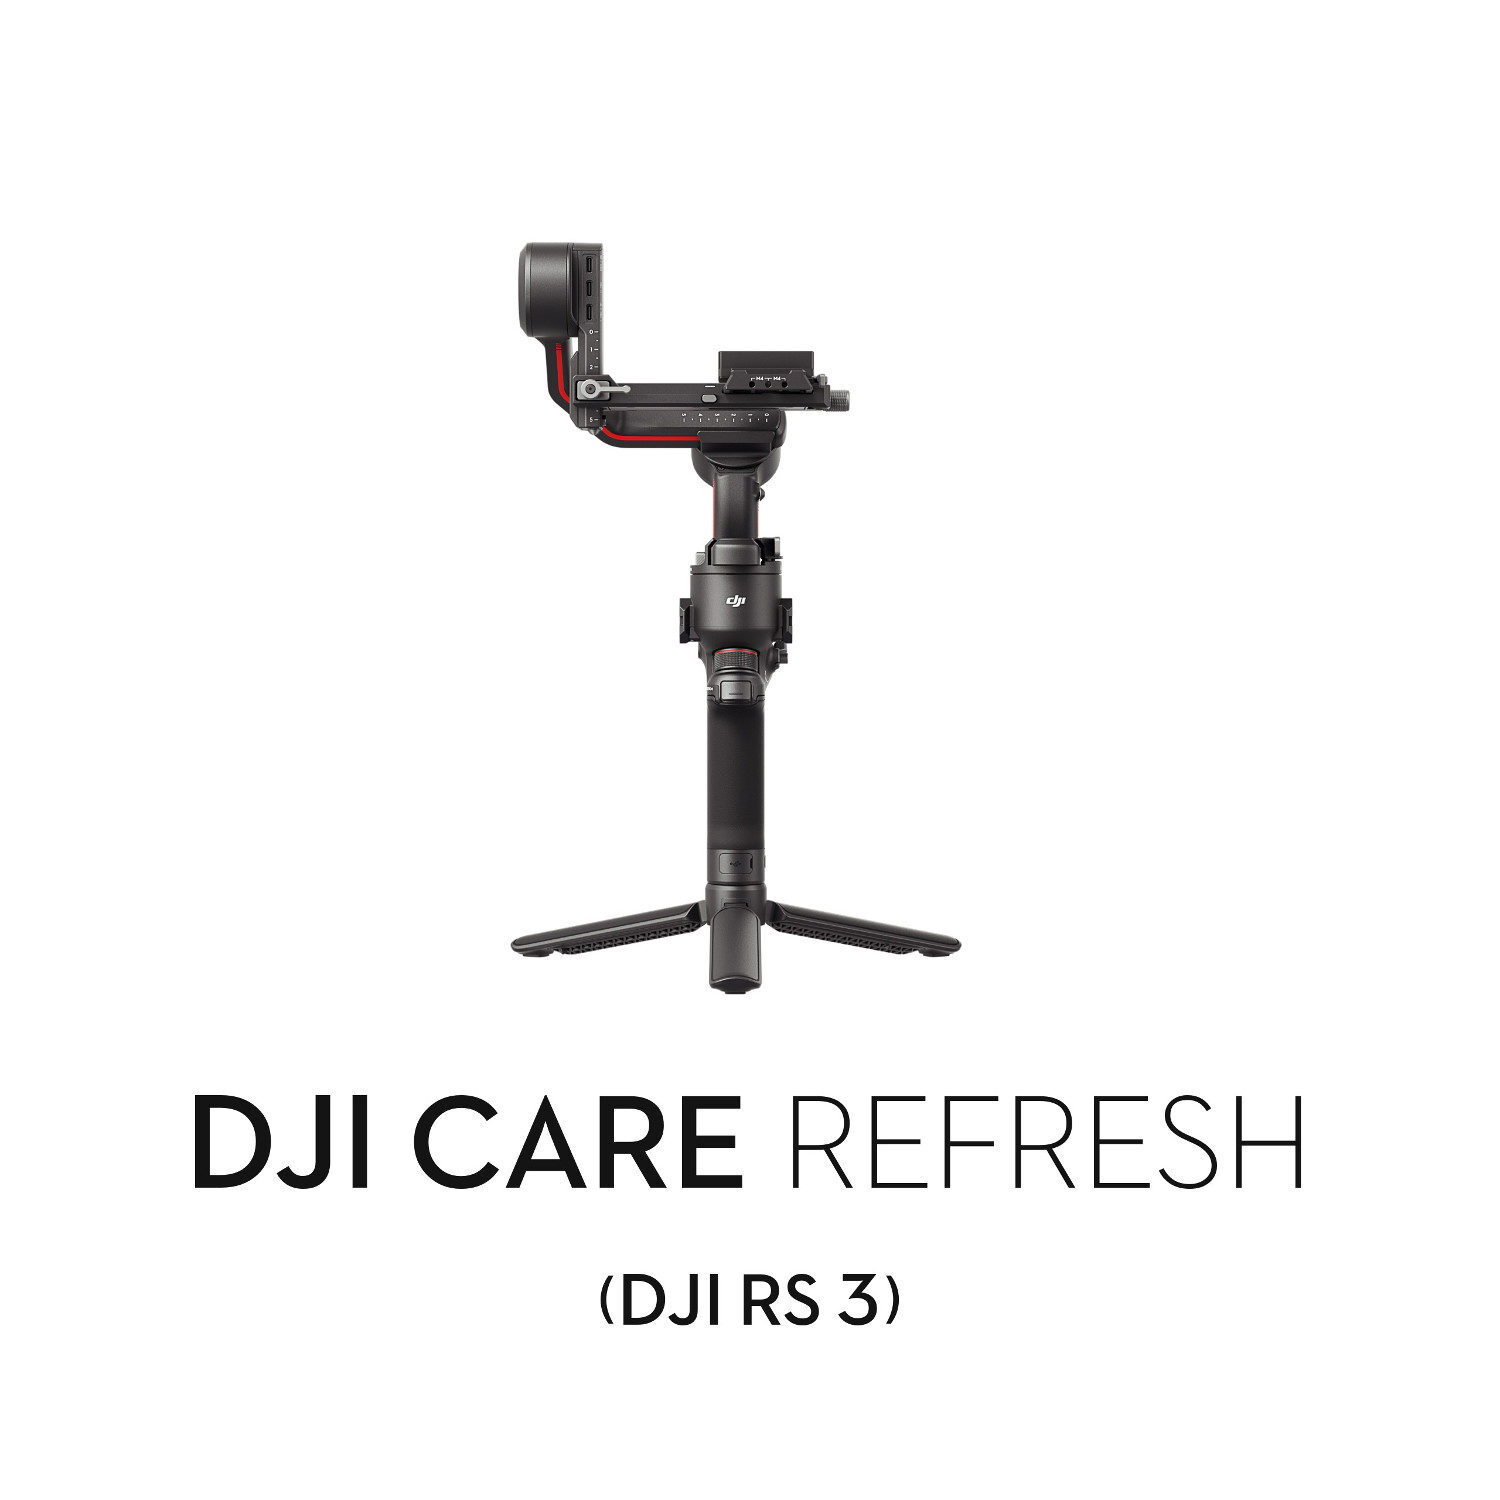 DJI DJI Care Refresh 1-Year Plan (DJI RS 3)